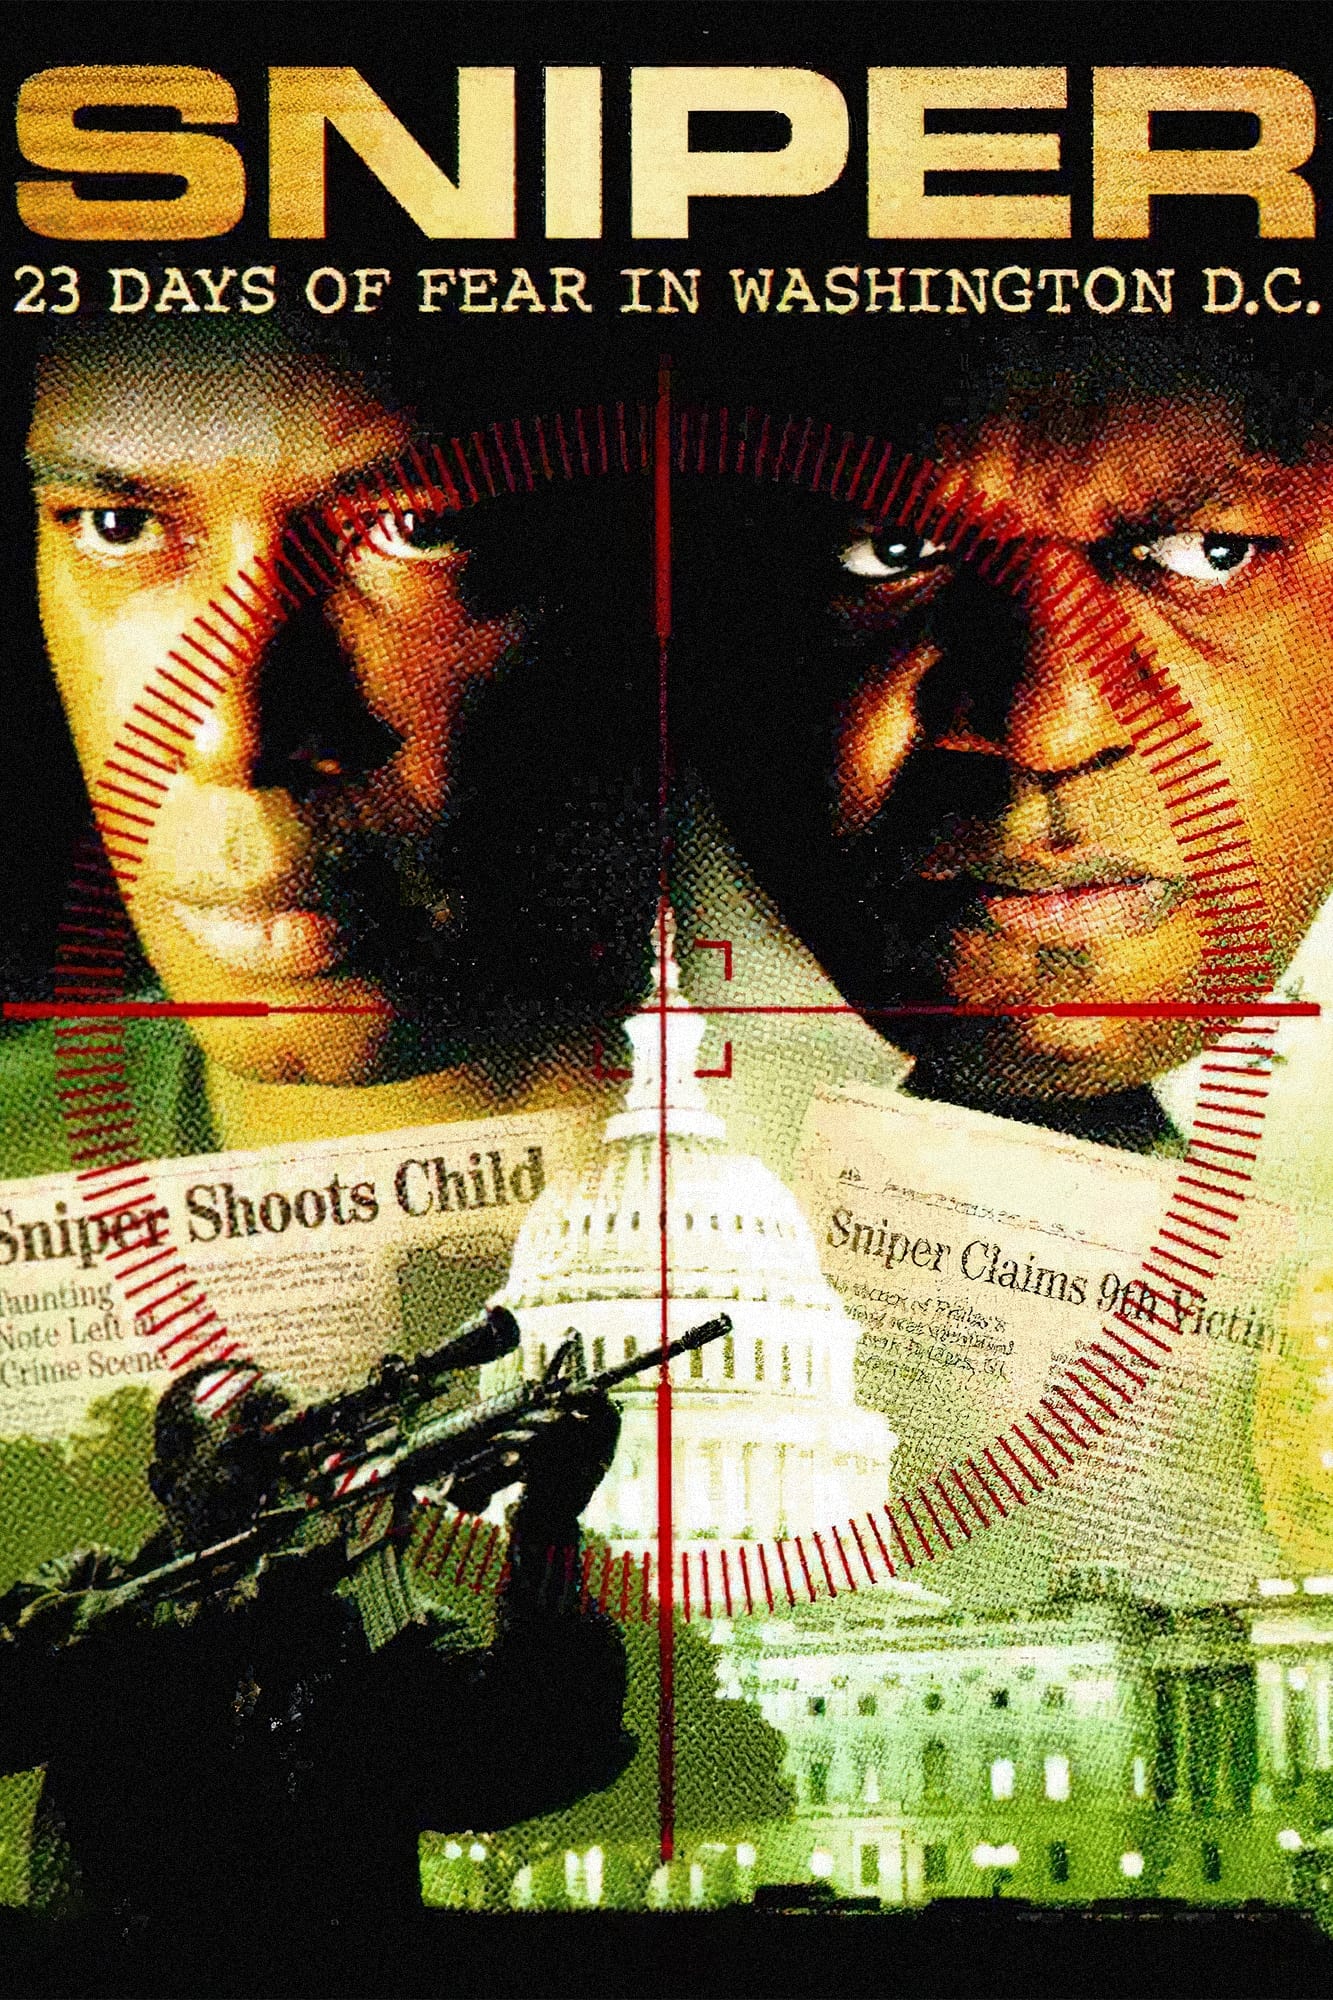 D.C. Sniper: 23 Days of Fear (2003)